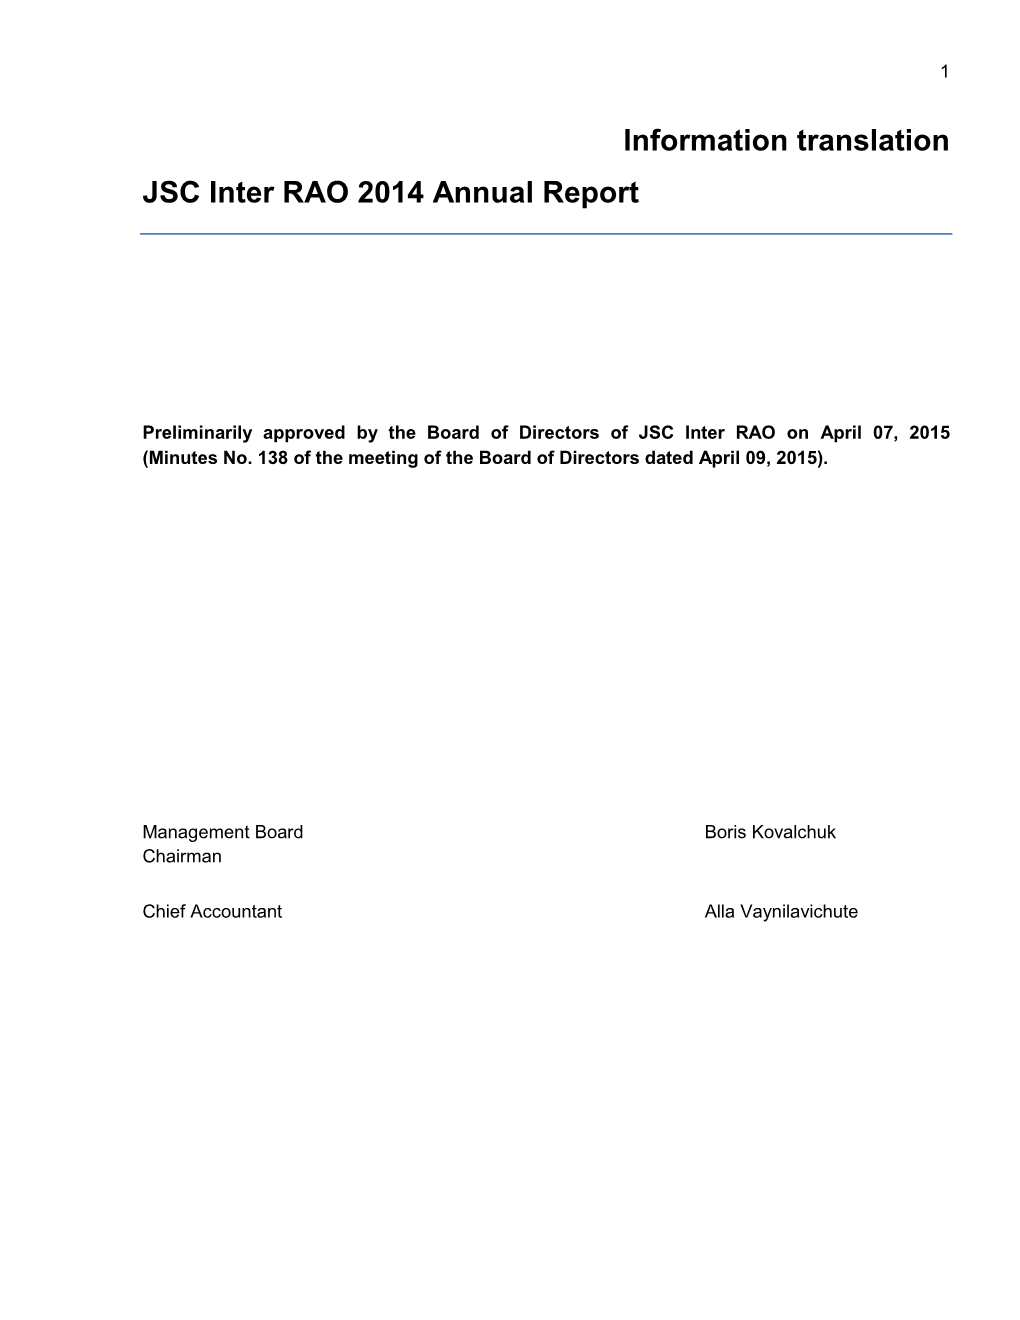 Information Translation JSC Inter RAO 2014 Annual Report